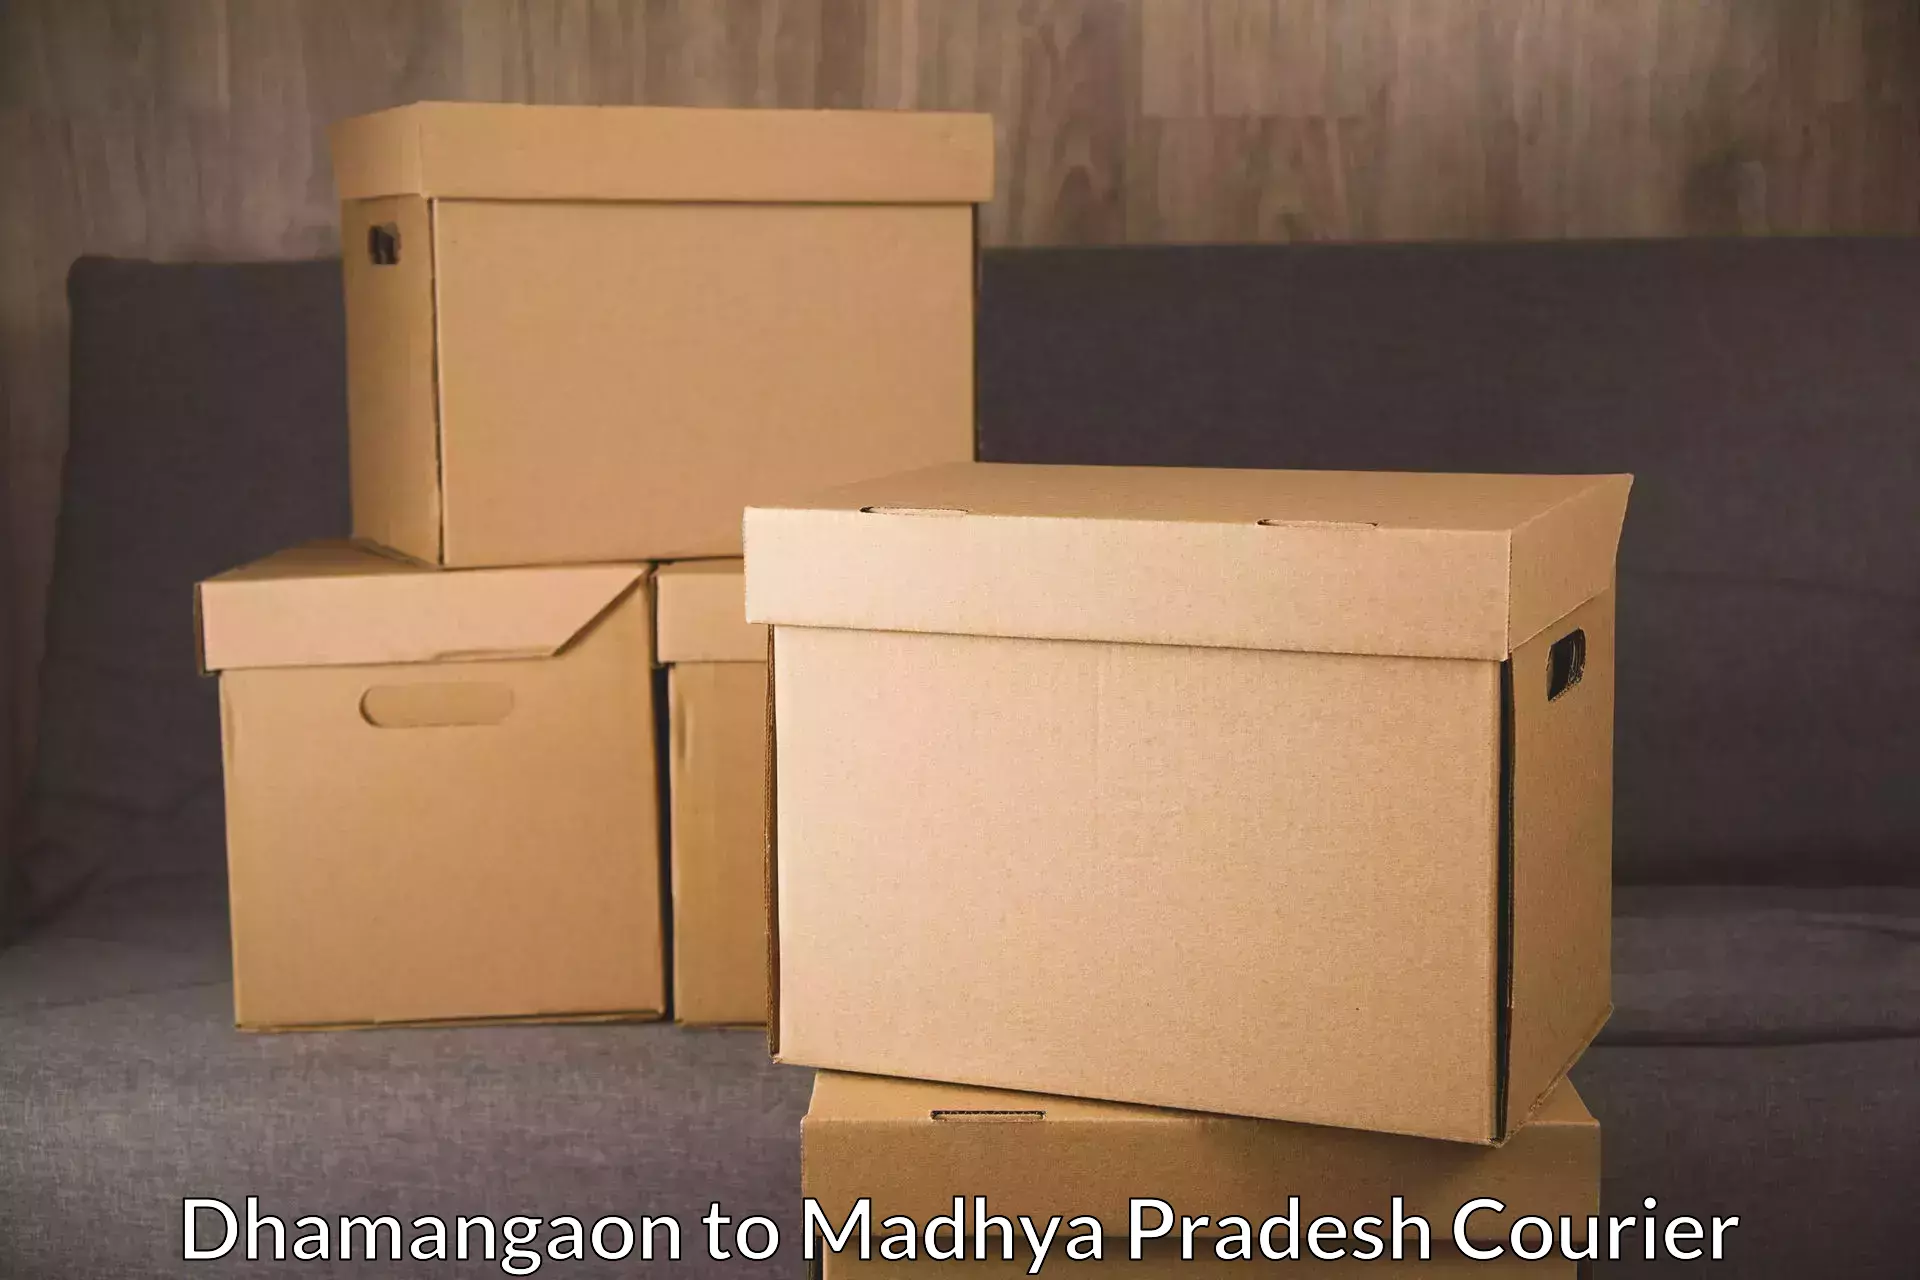 Package delivery network Dhamangaon to Ganj Basoda